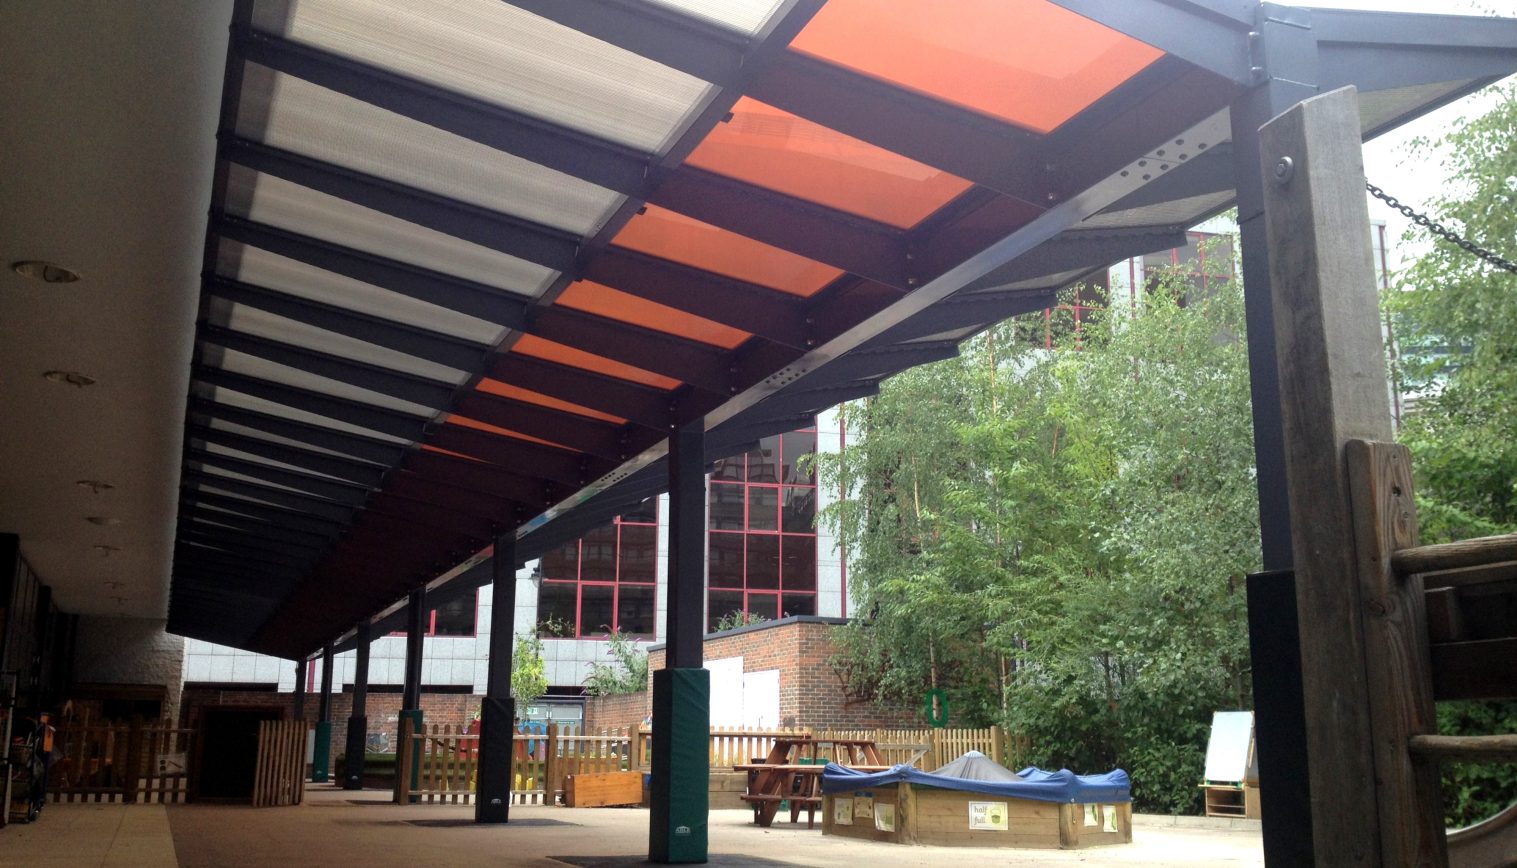 Prior Weston Primary School – Free Standing Canopy